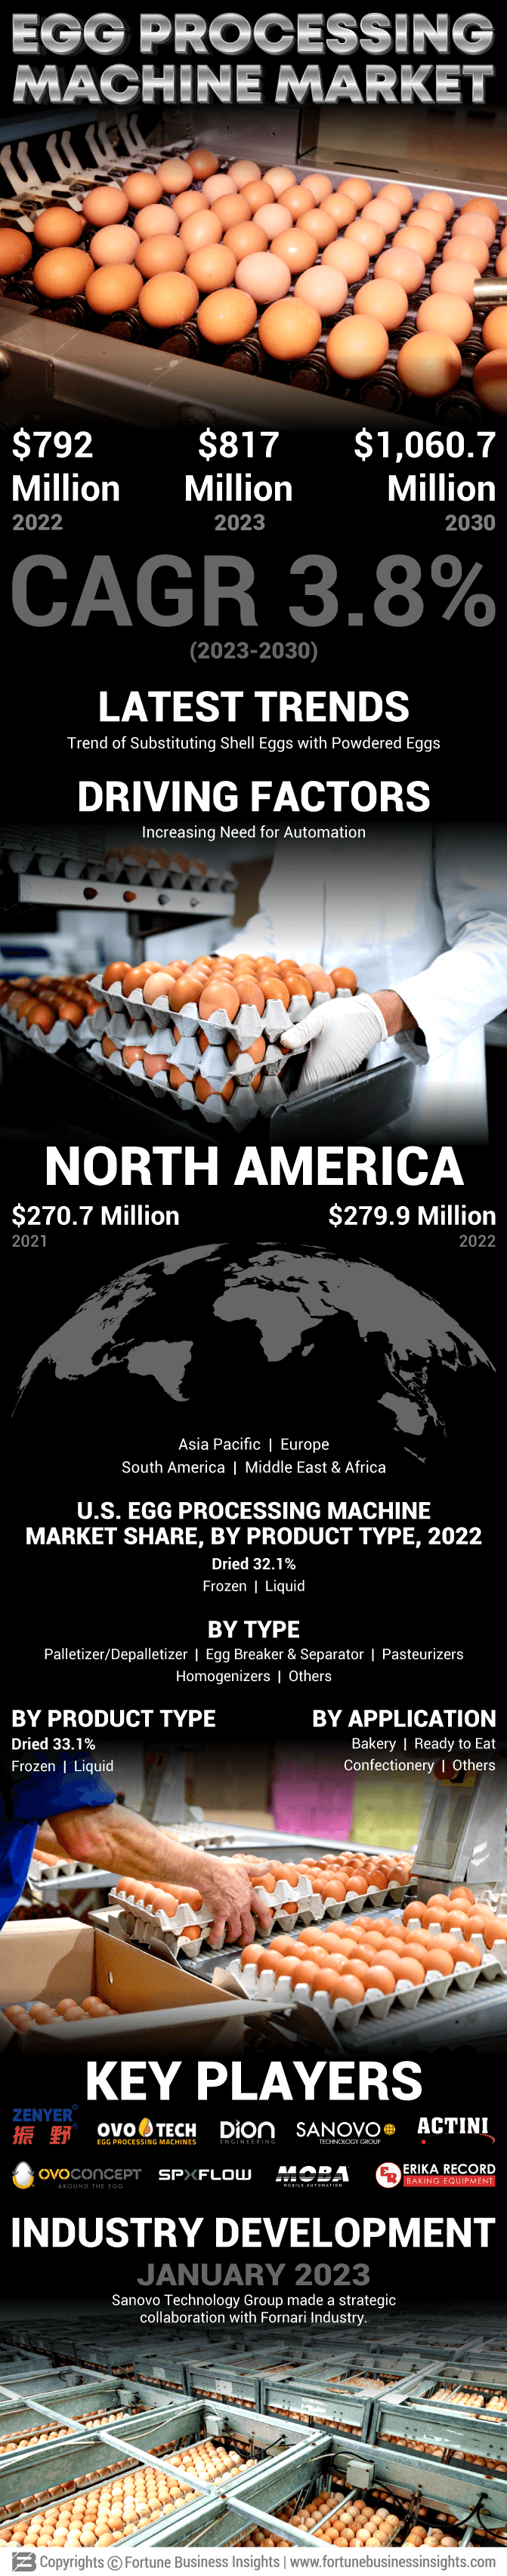 Egg Processing Machine Market